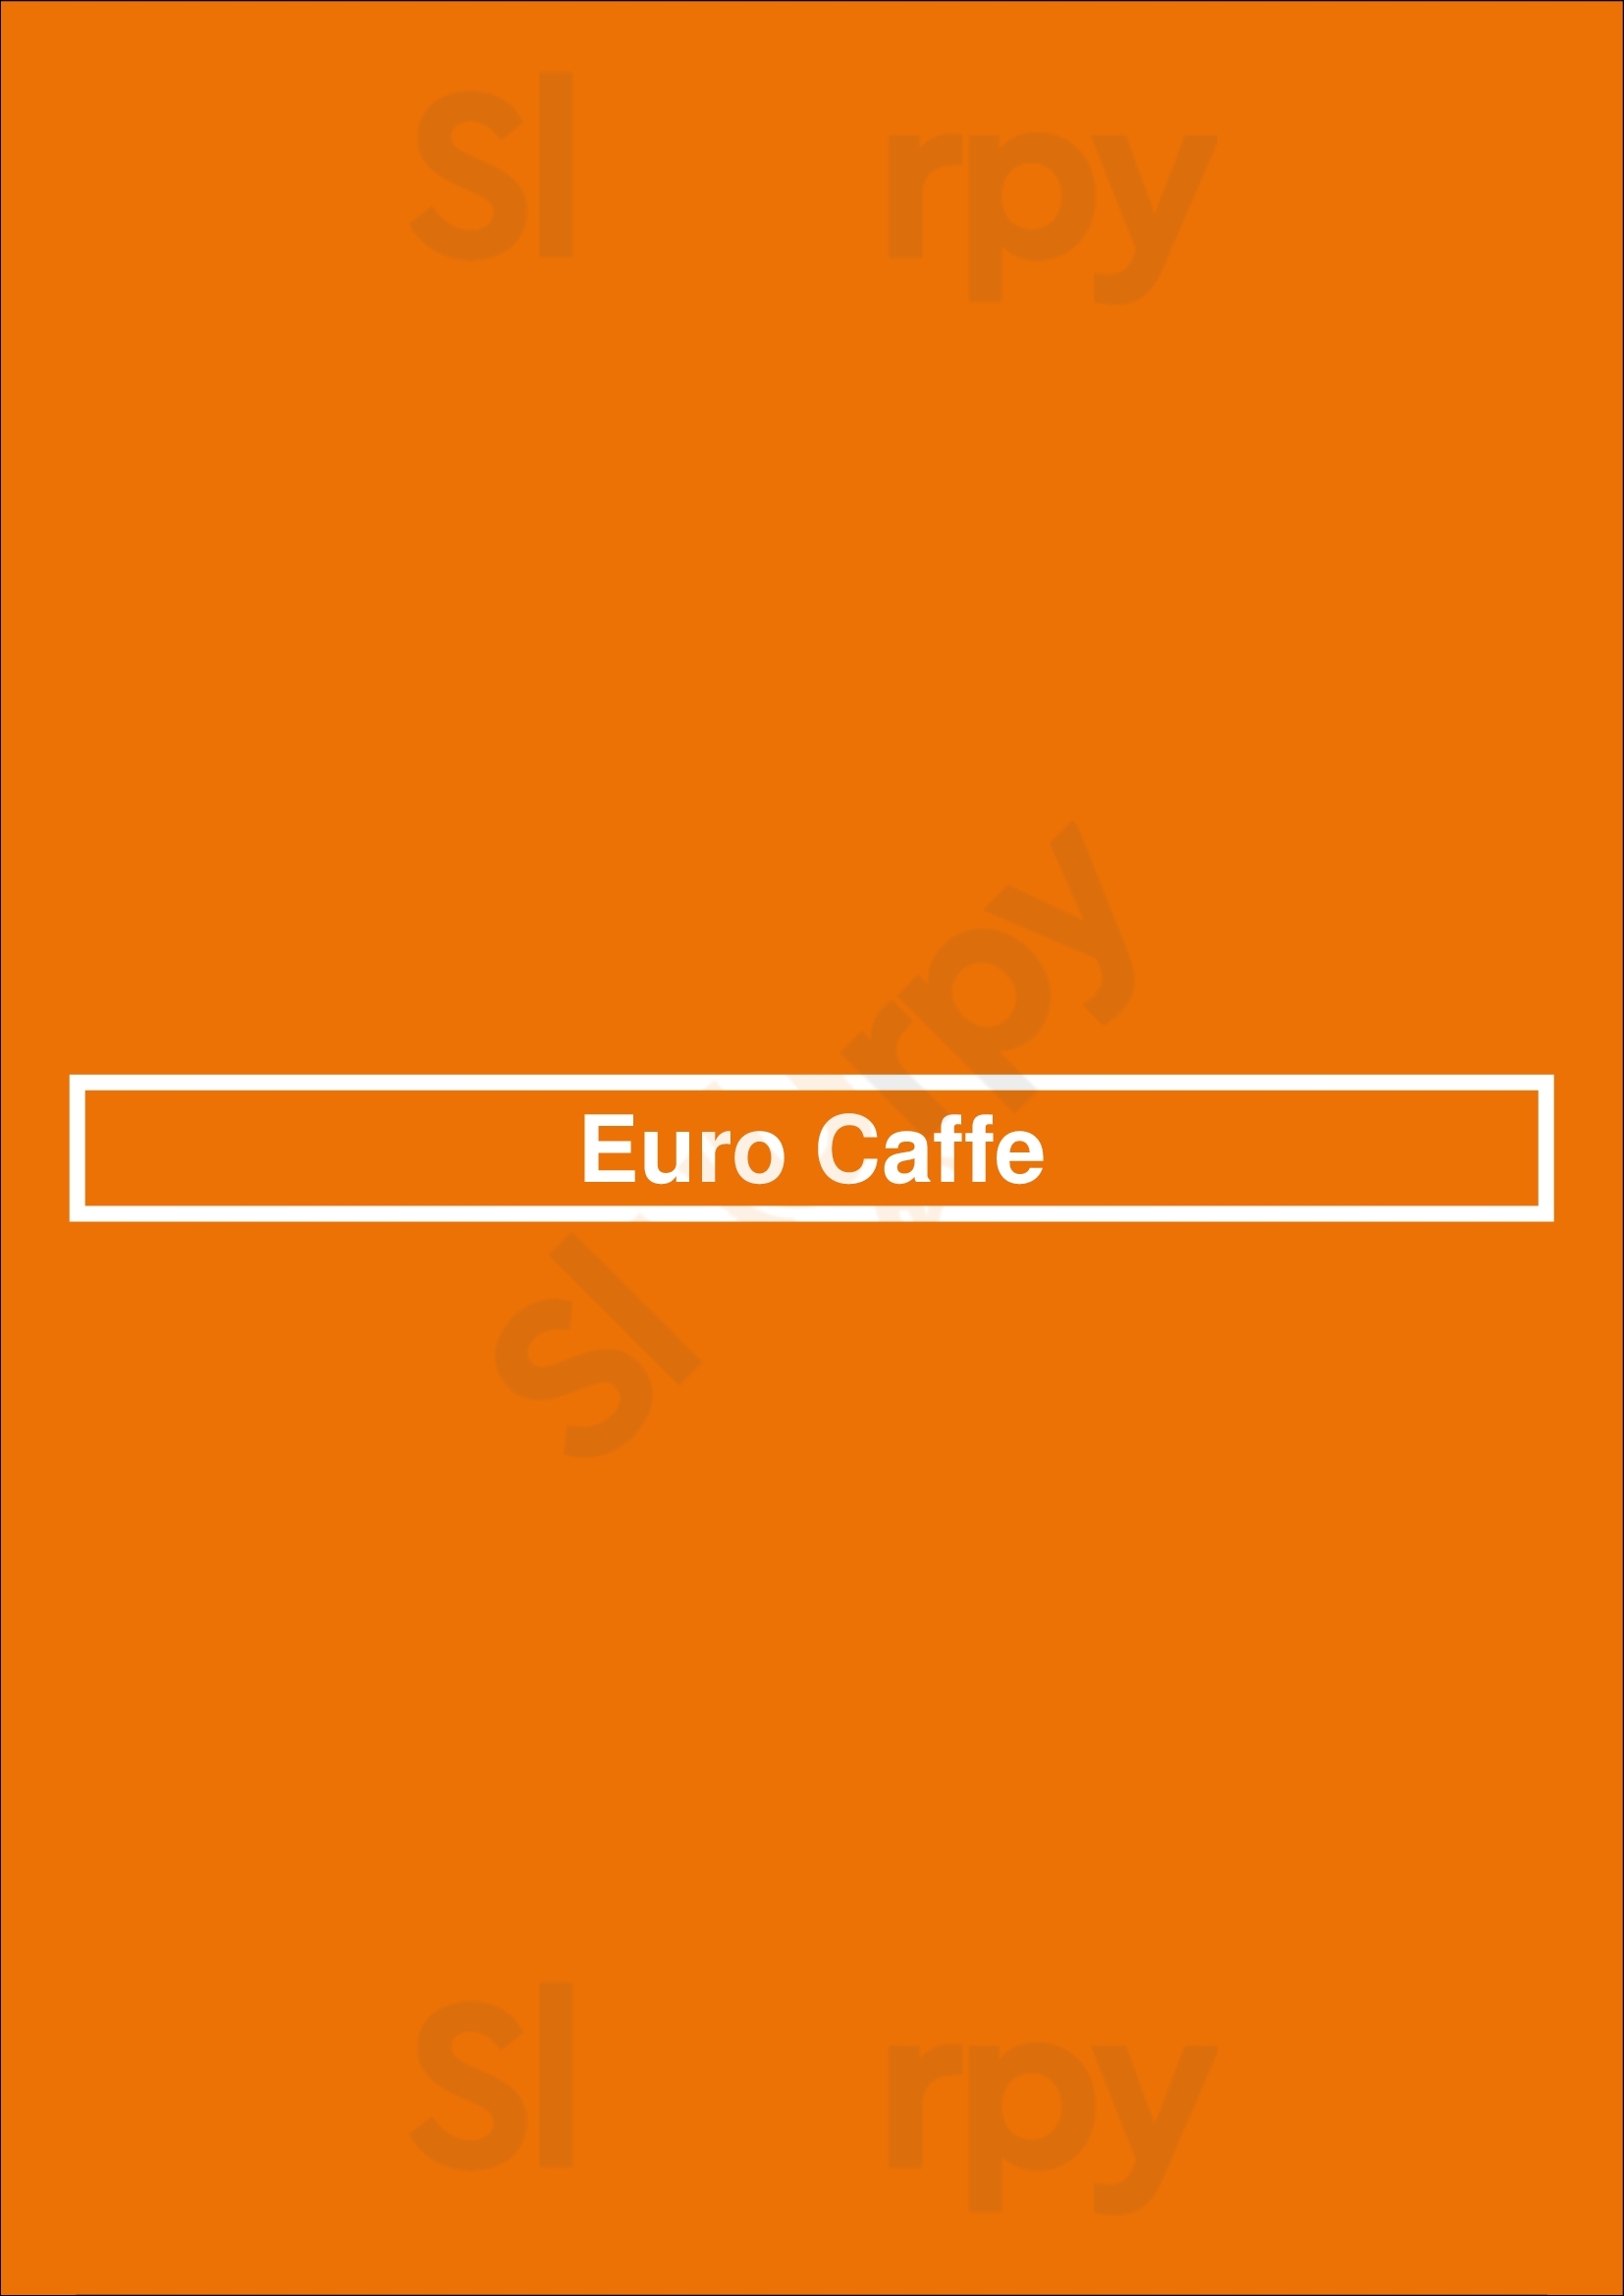 Euro Caffe Huntington Beach Menu - 1